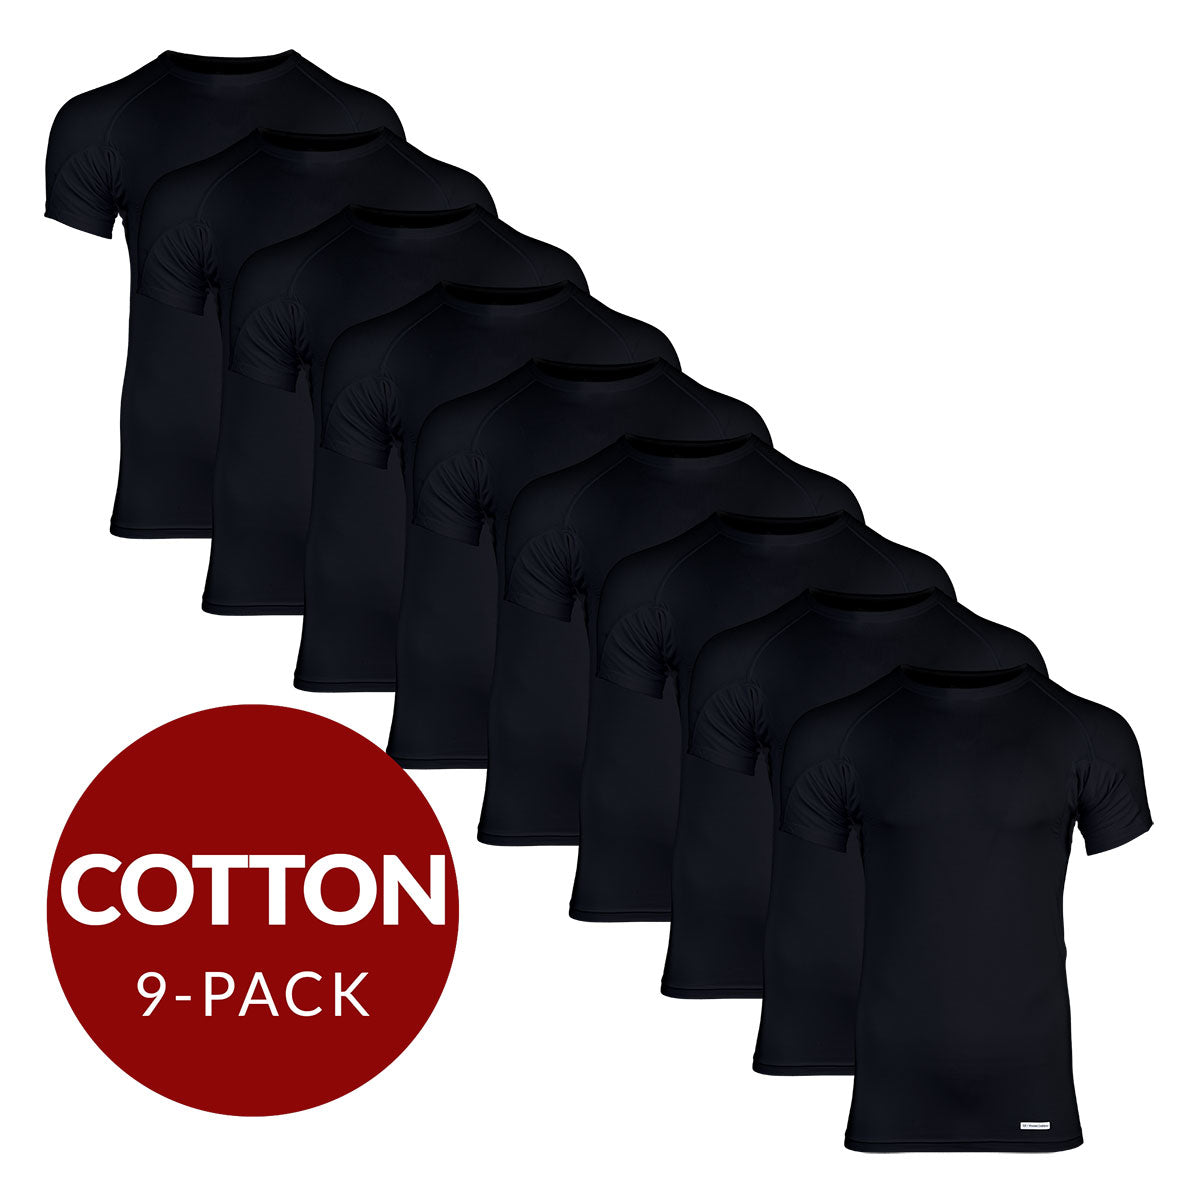 Crew Neck Cotton Sweat Proof Undershirt For Men - Black 9-Pack - Ejis